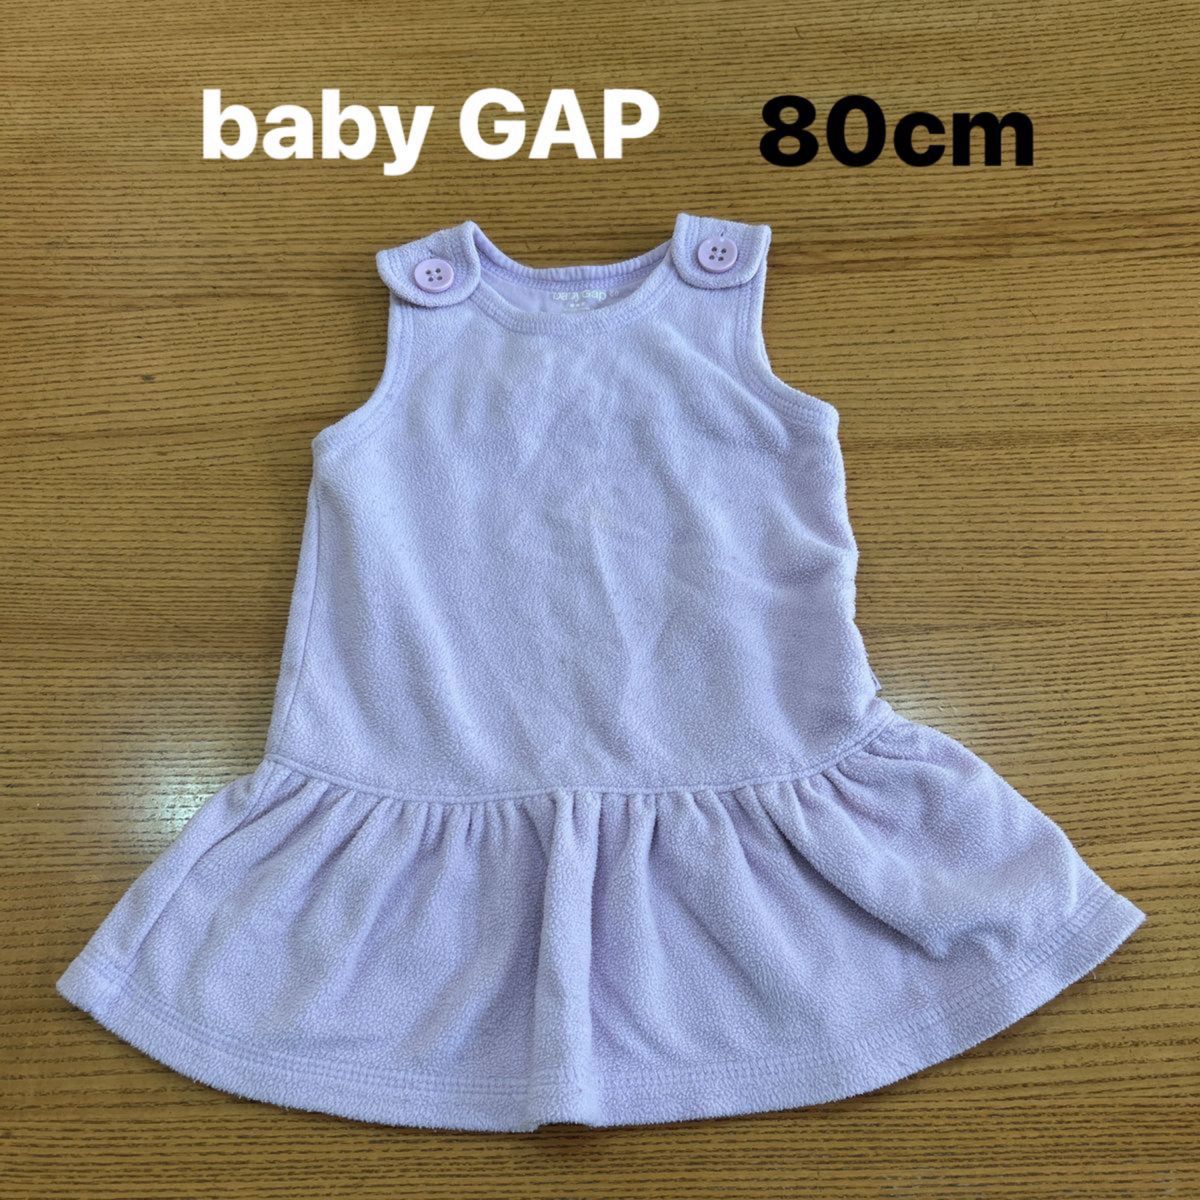 【baby GAP】(USED)フリース素材  ラベンダー色 ジャンパースカート 80cm  女の子 ワンピース 